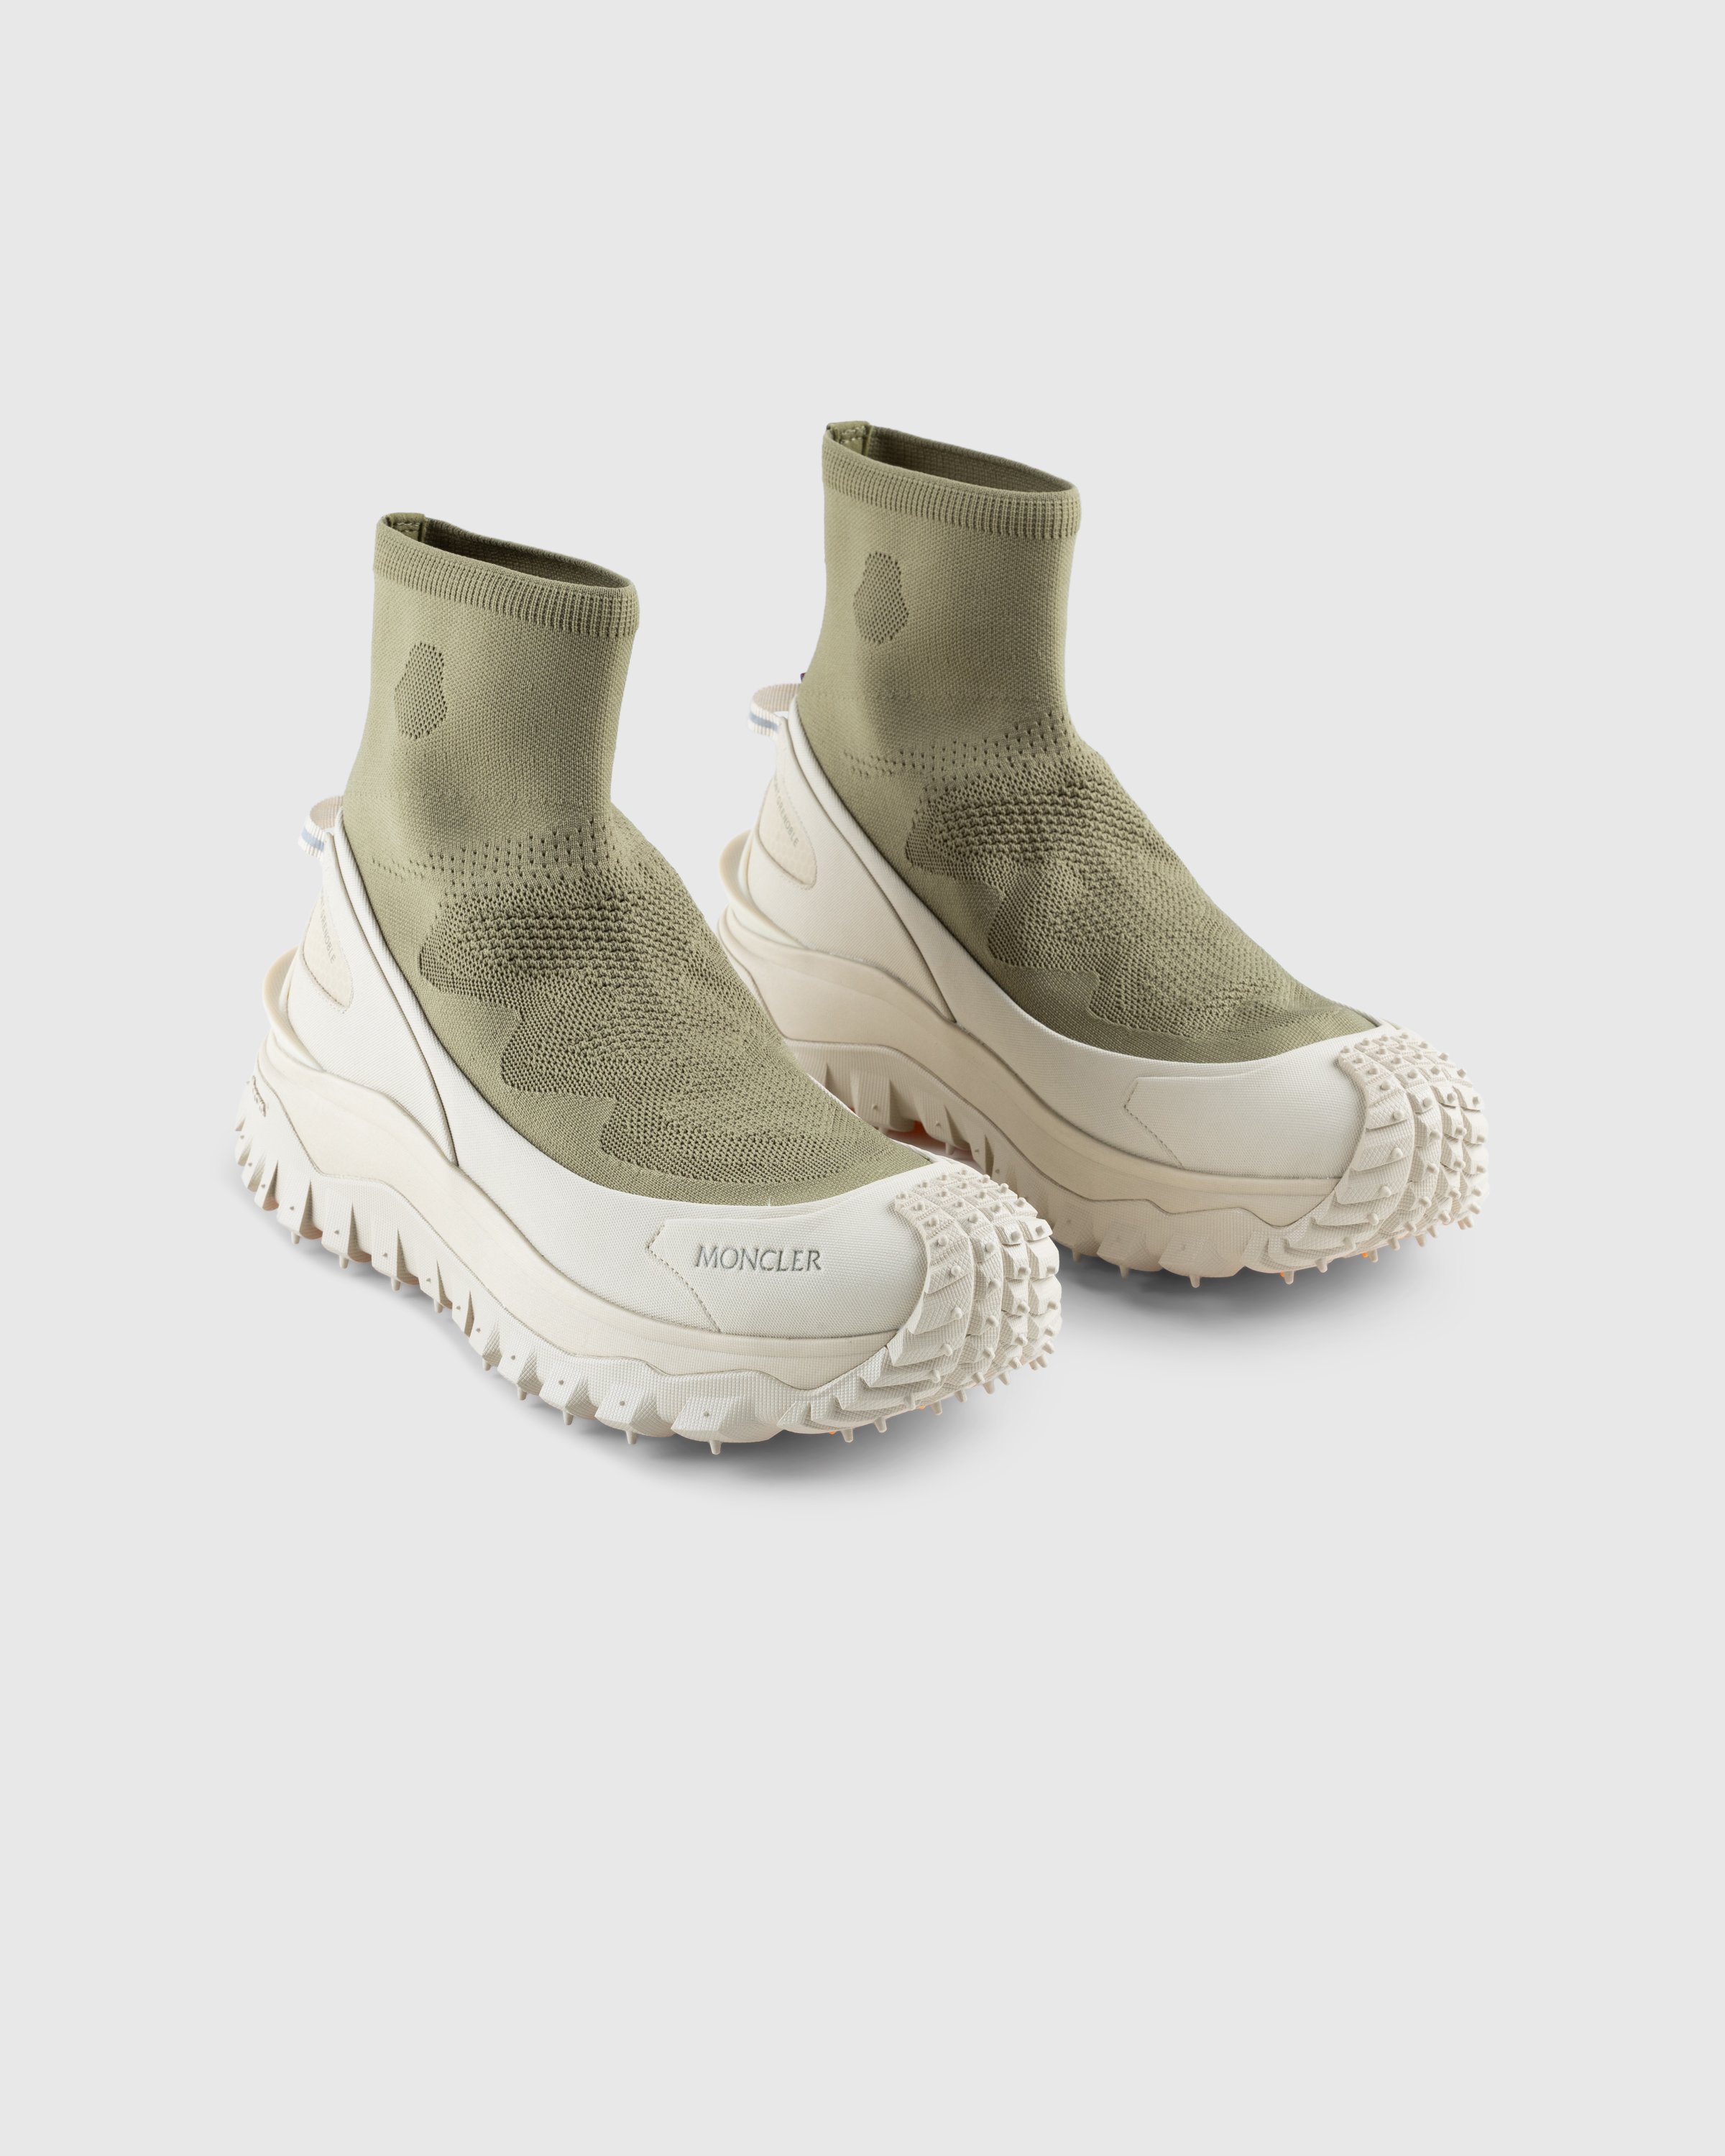 Moncler - Trailgrip Knit High Top Sneakers Medium Green - Footwear - Green - Image 3